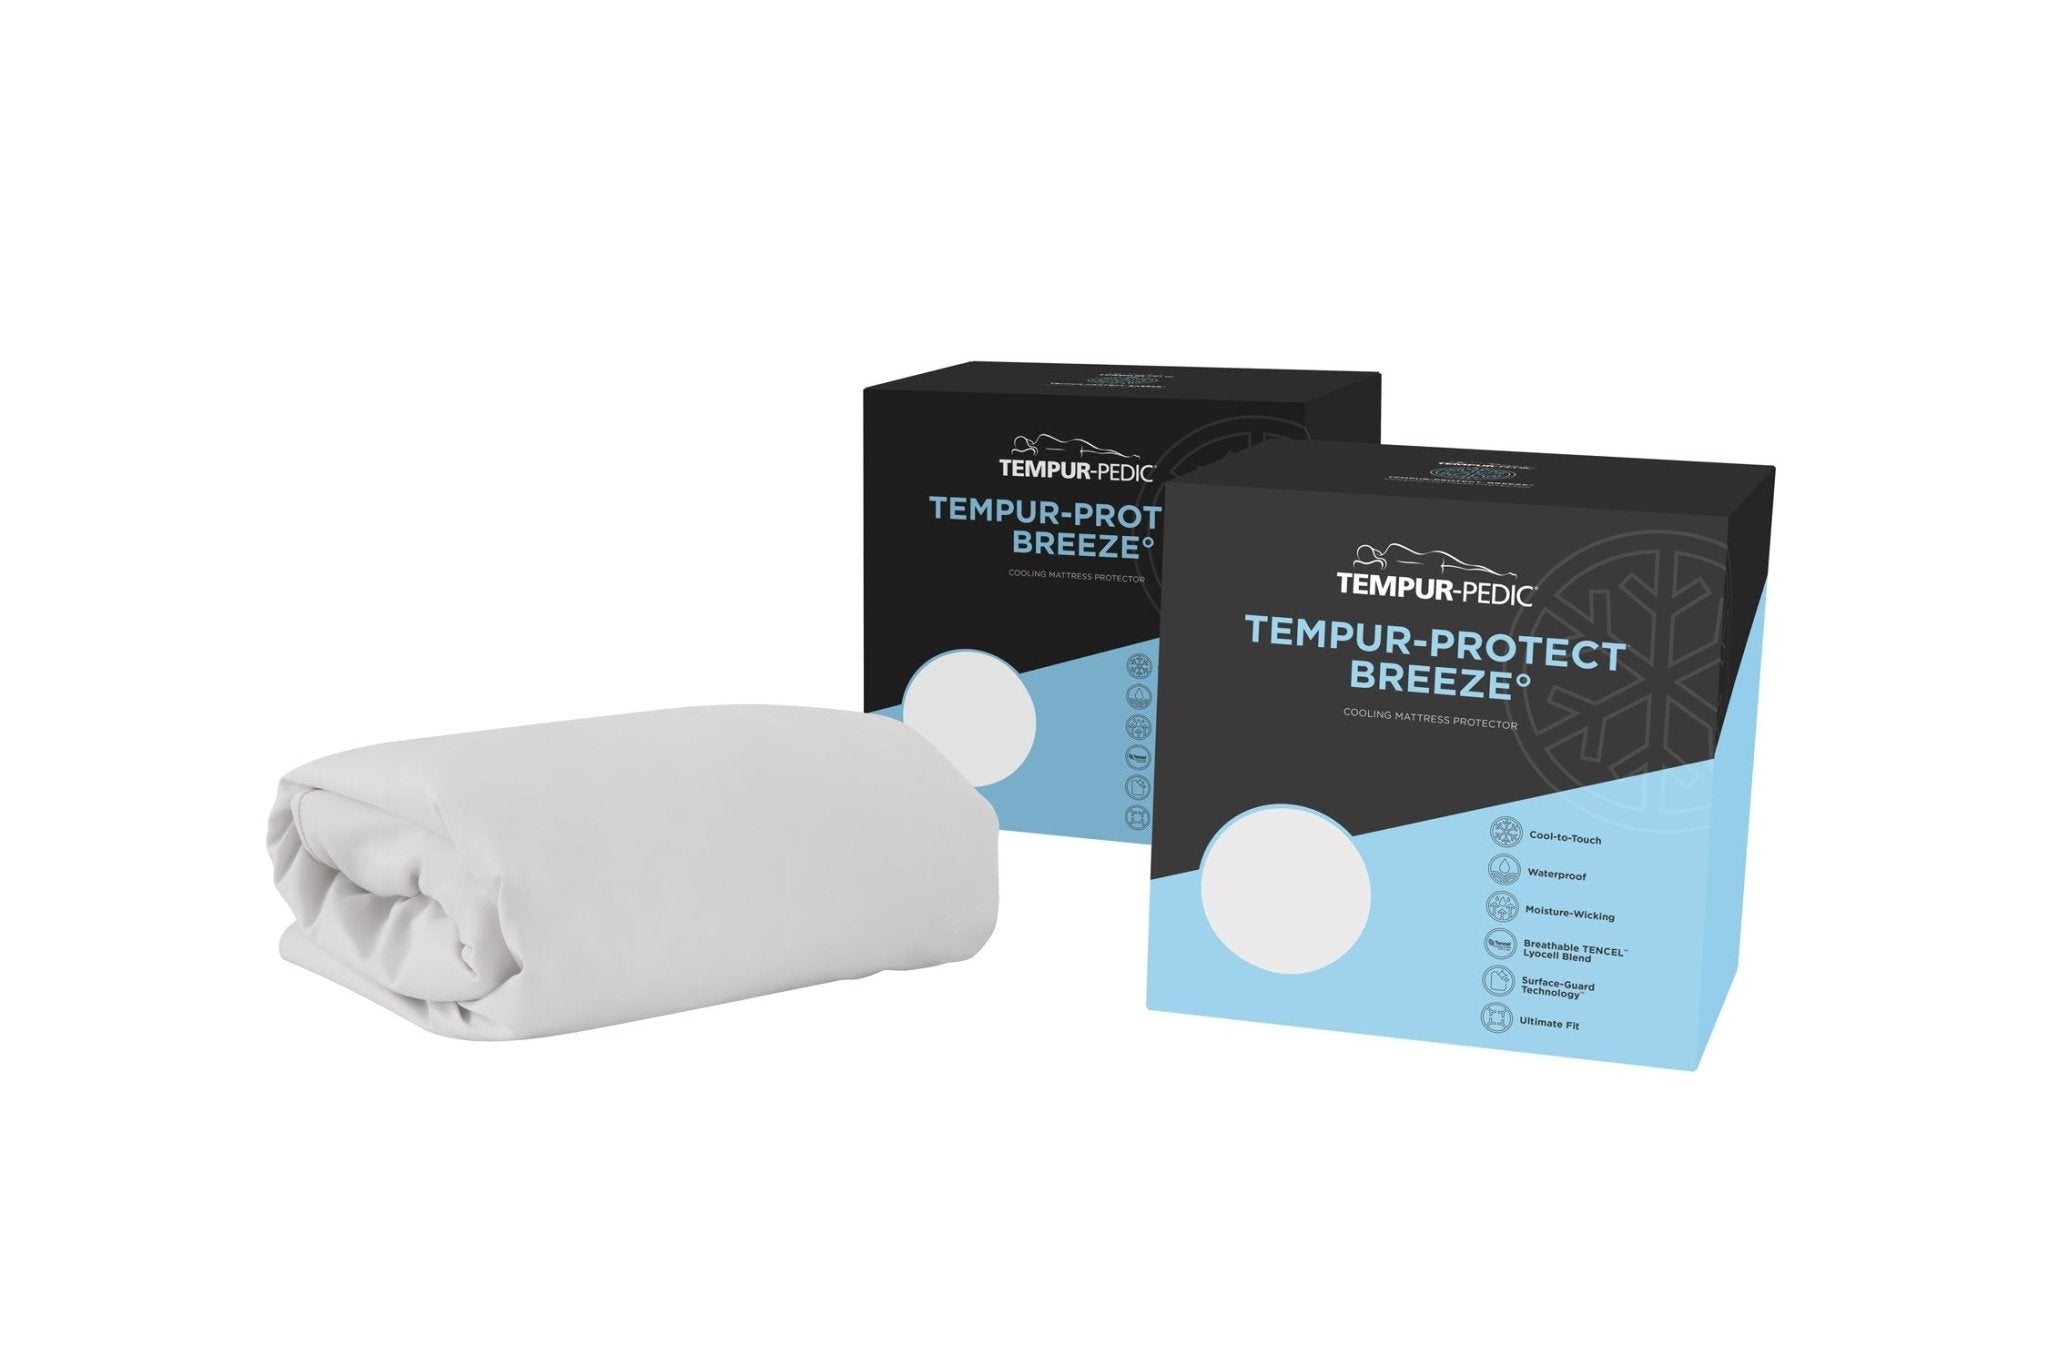 Tempur-Pedic TEMPUR-Protect Breeze° Mattress Protector